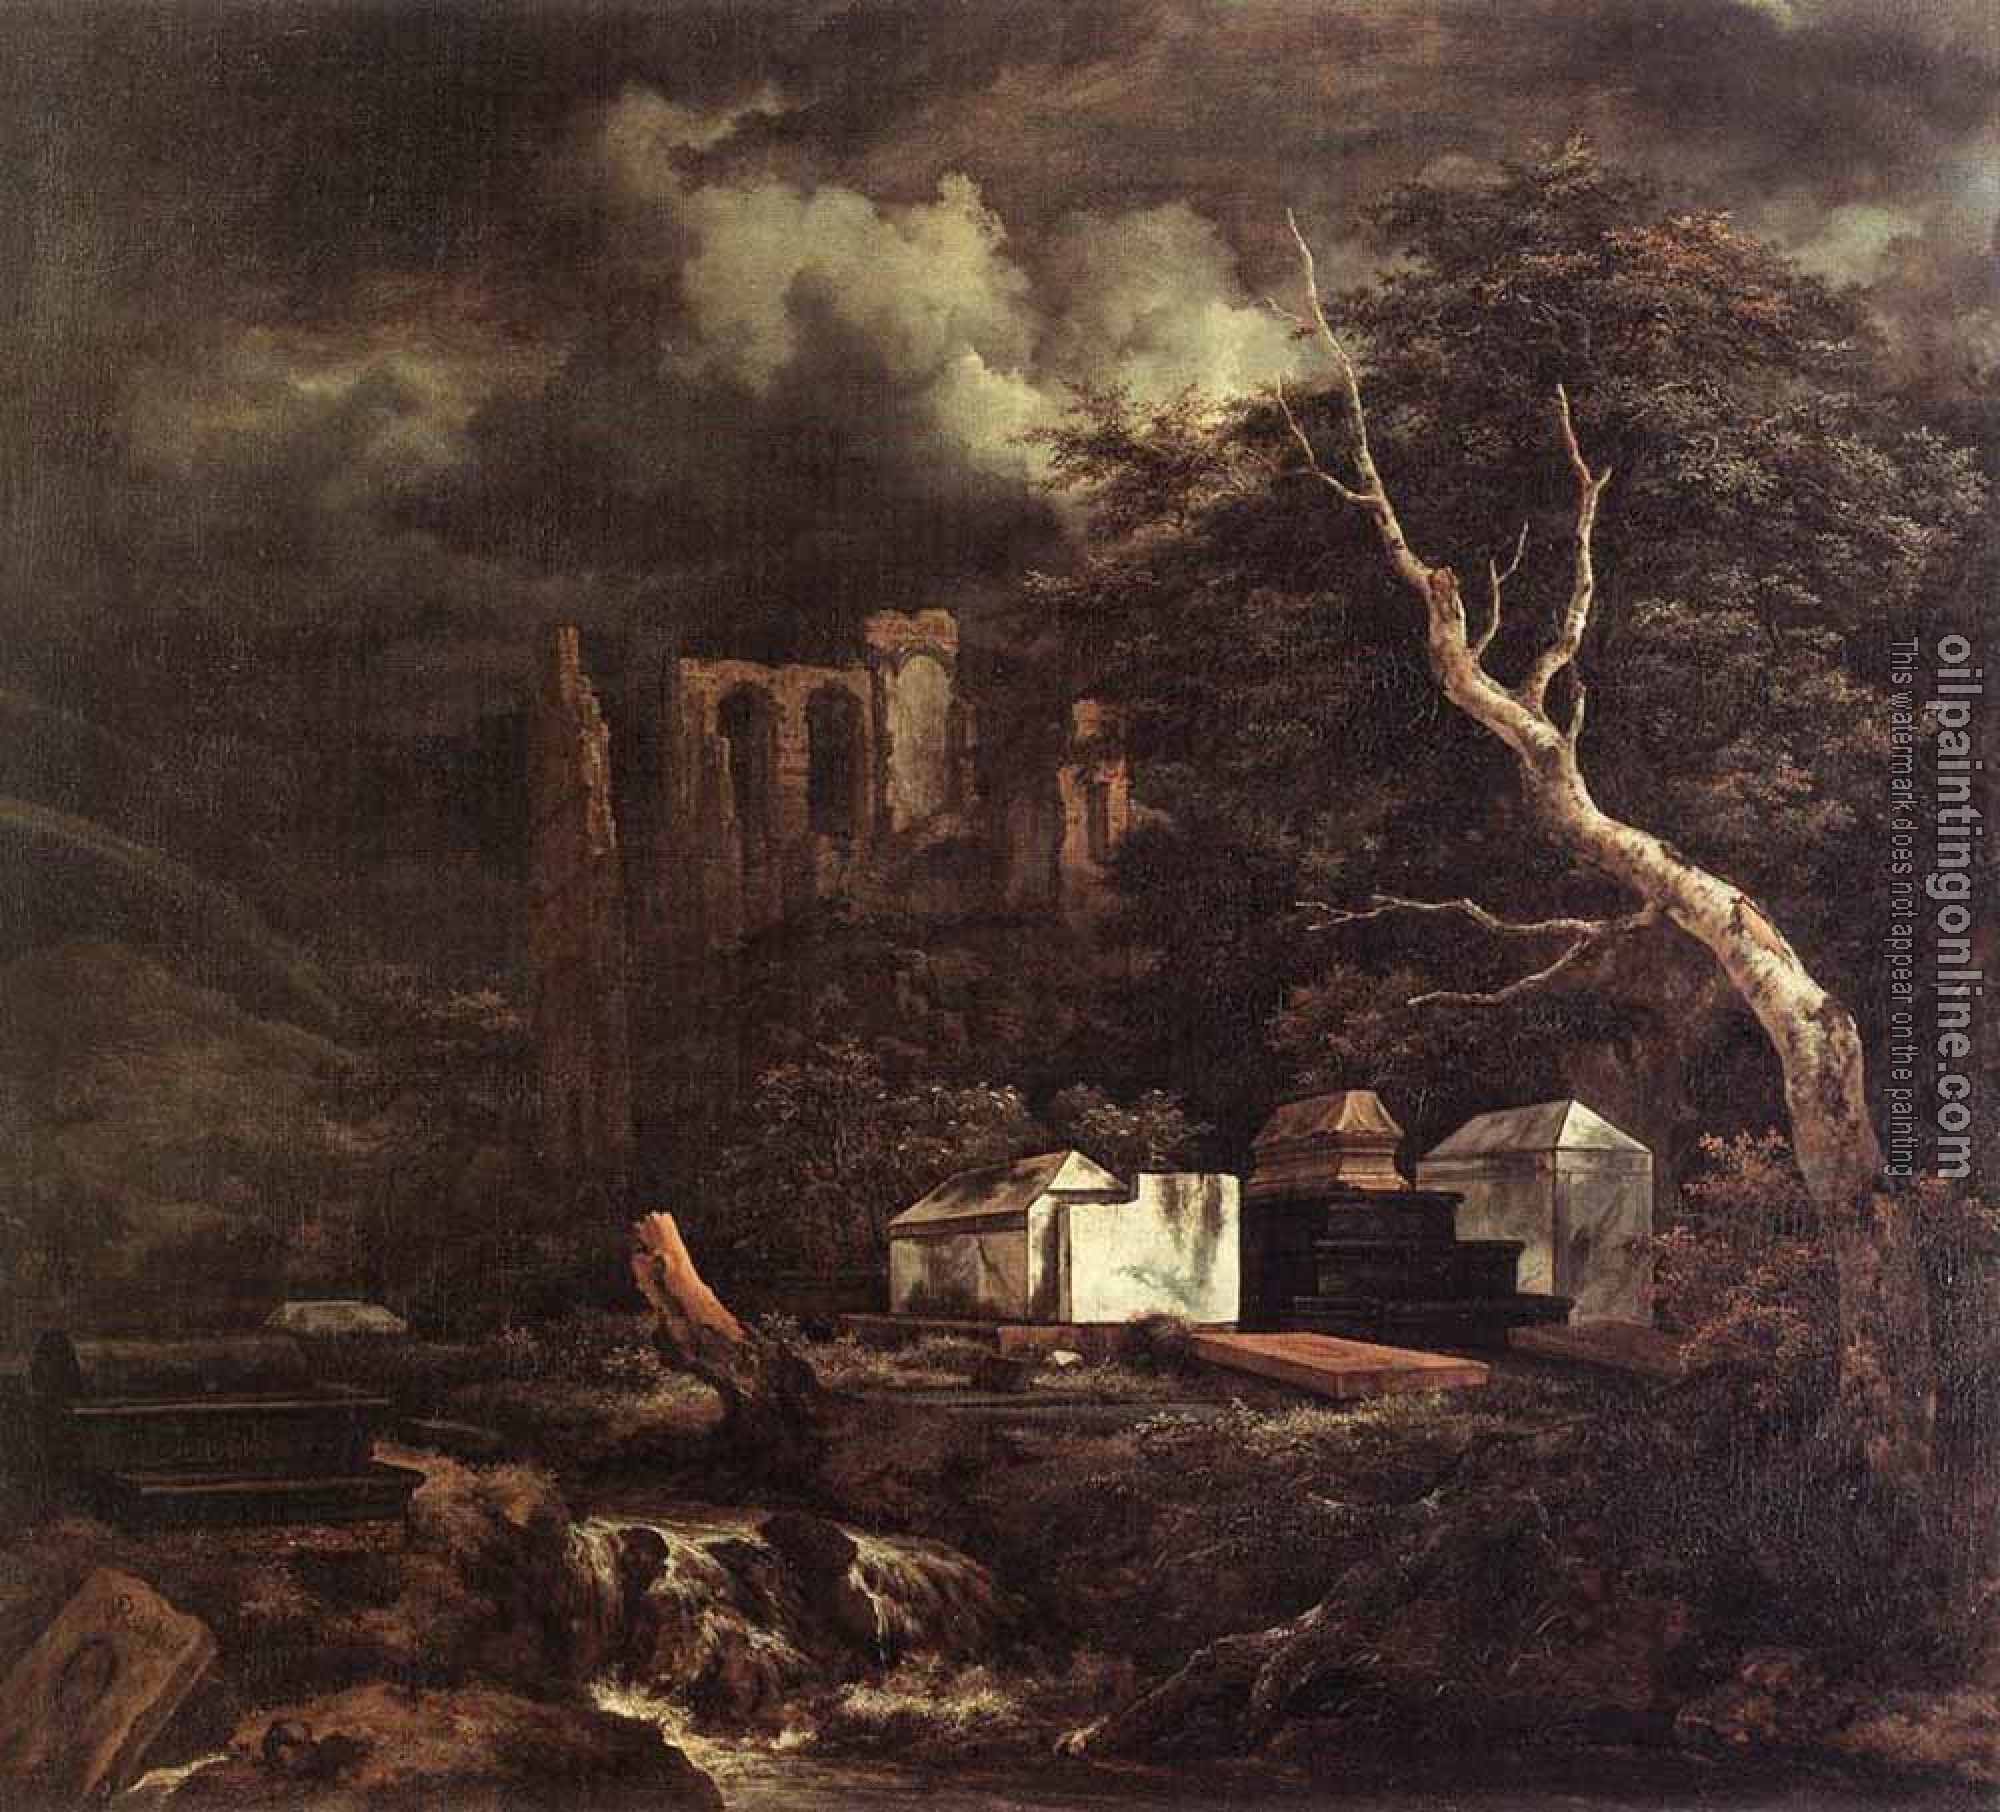 Jacob van Ruisdael - The Jewish Cemetary